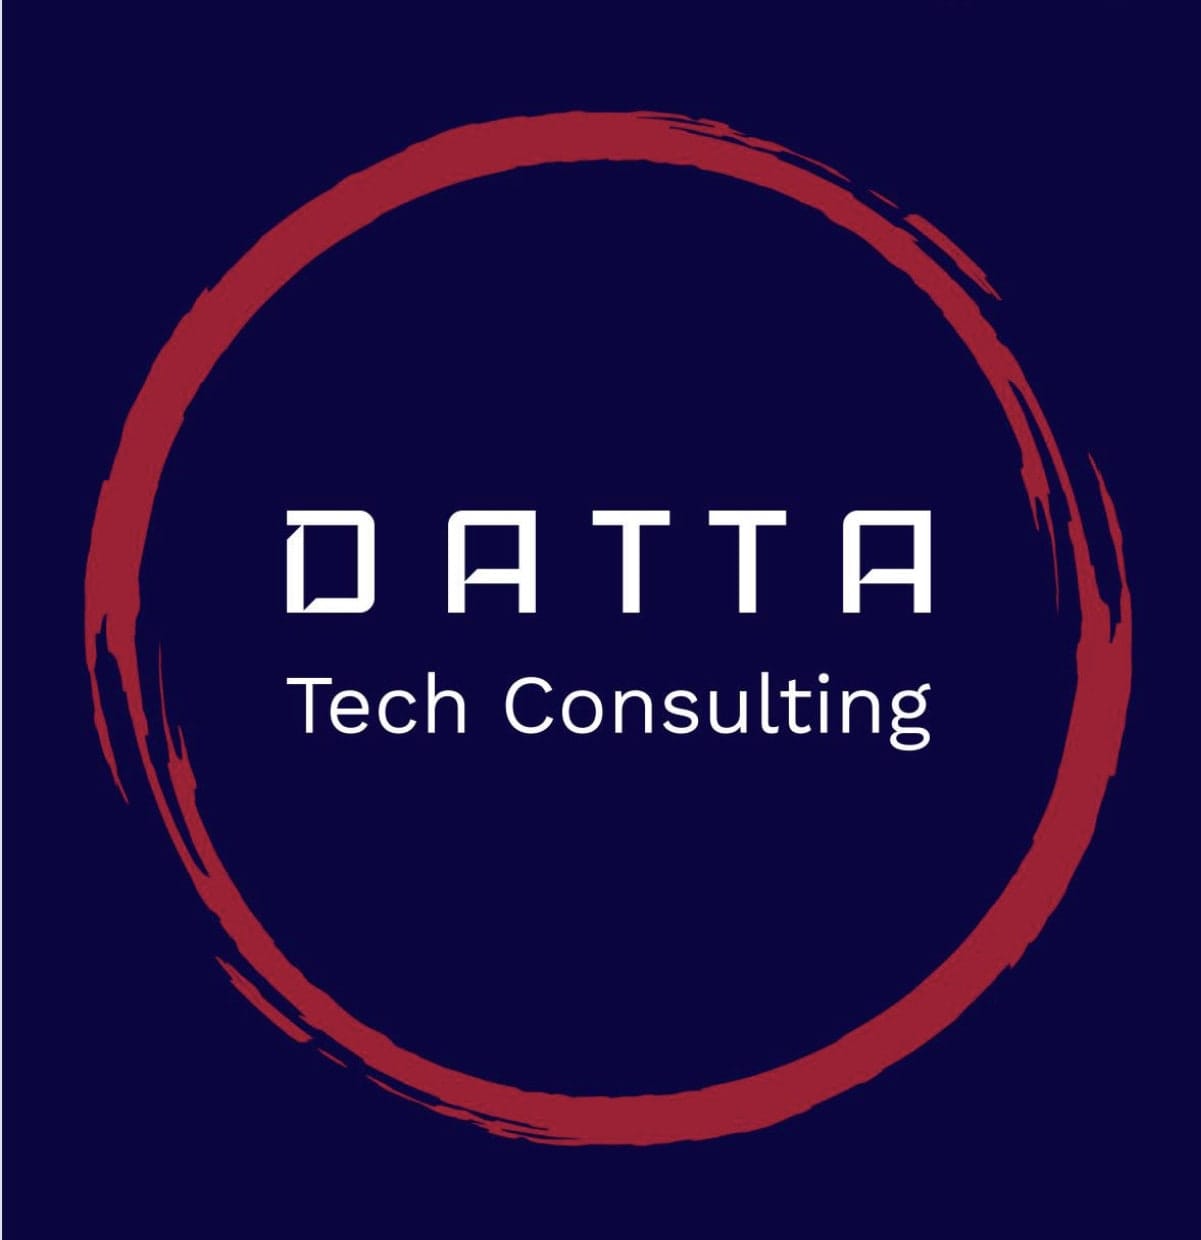 Datta Tech Consulting